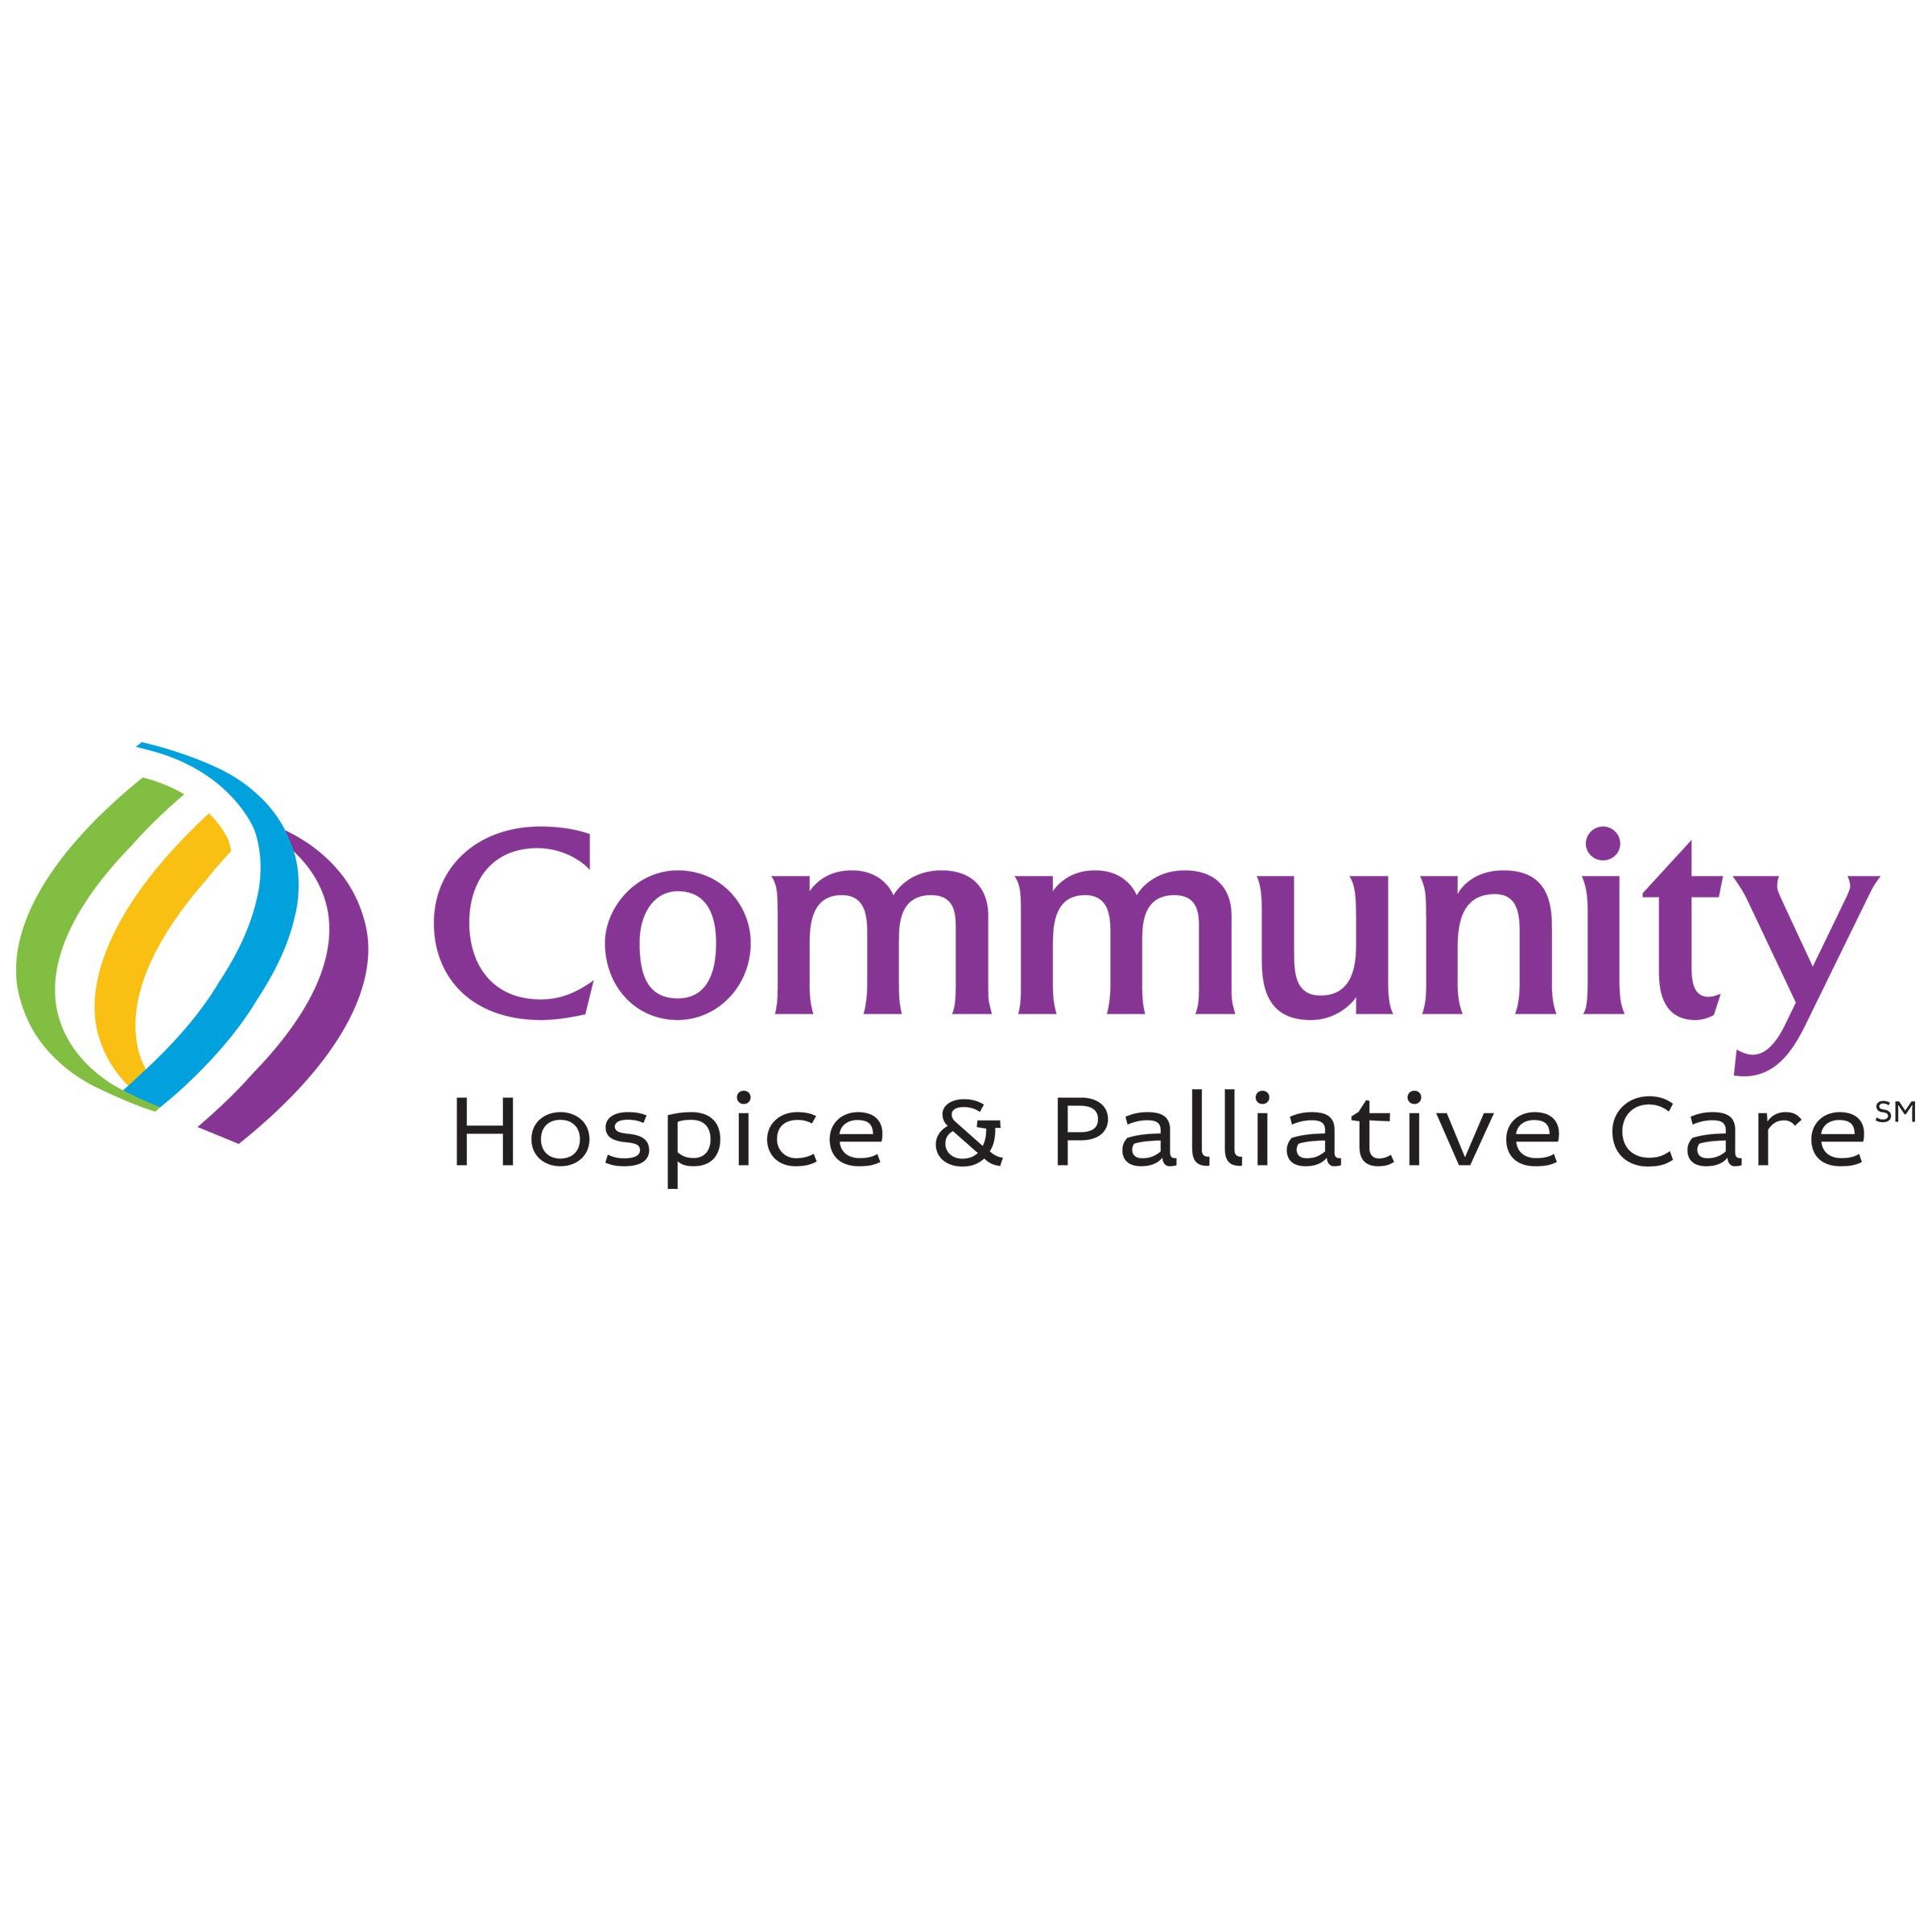 Community Hospice & Palliative Care - Jacksonville, FL 32257 - (904)268-5200 | ShowMeLocal.com